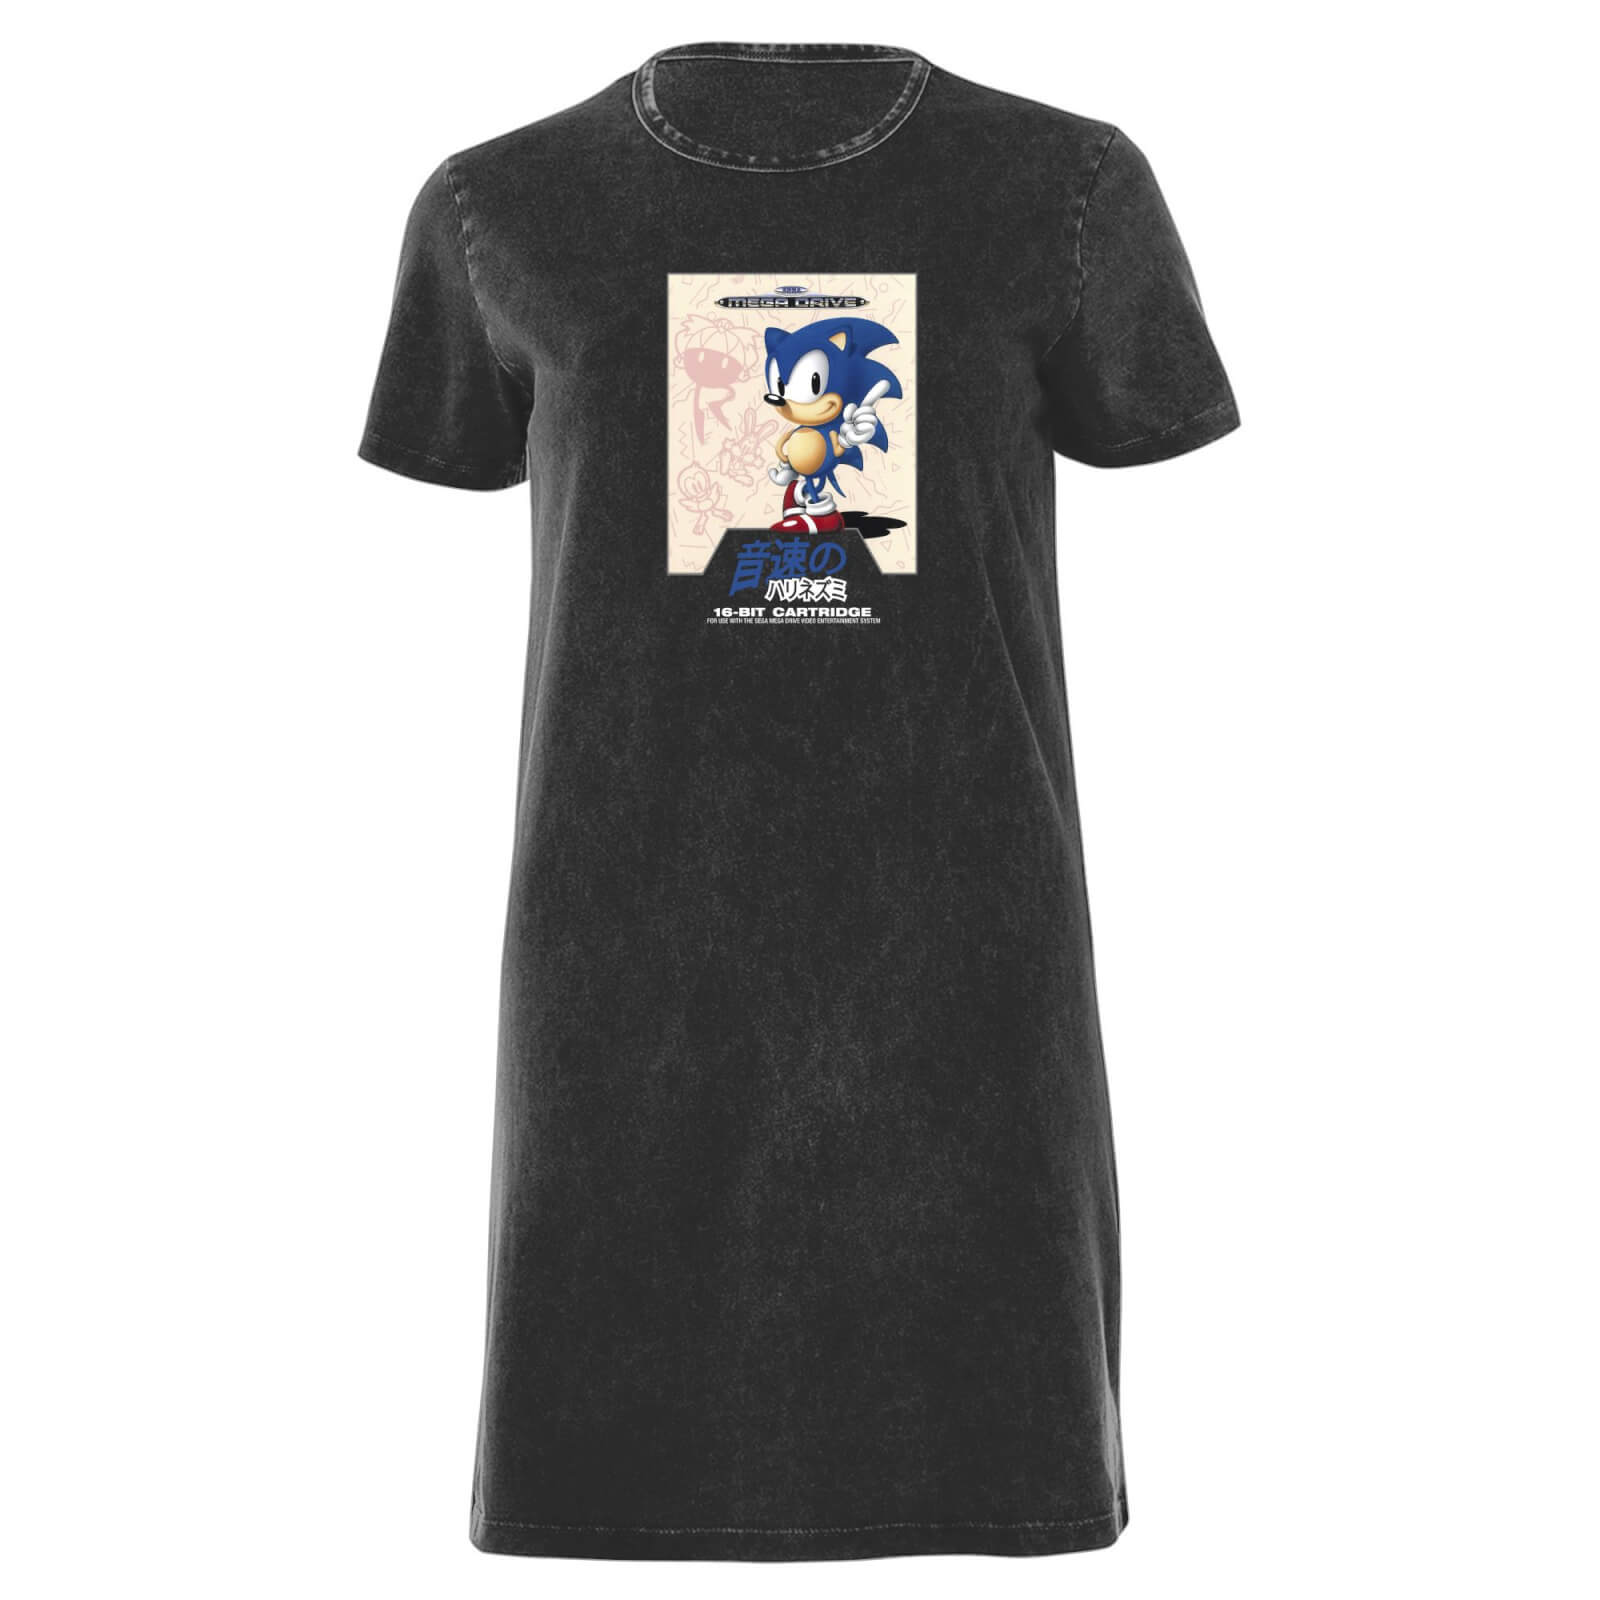 Sega Sonic Women's T-Shirt Dress - Black Acid Wash - S - Black Acid Wash